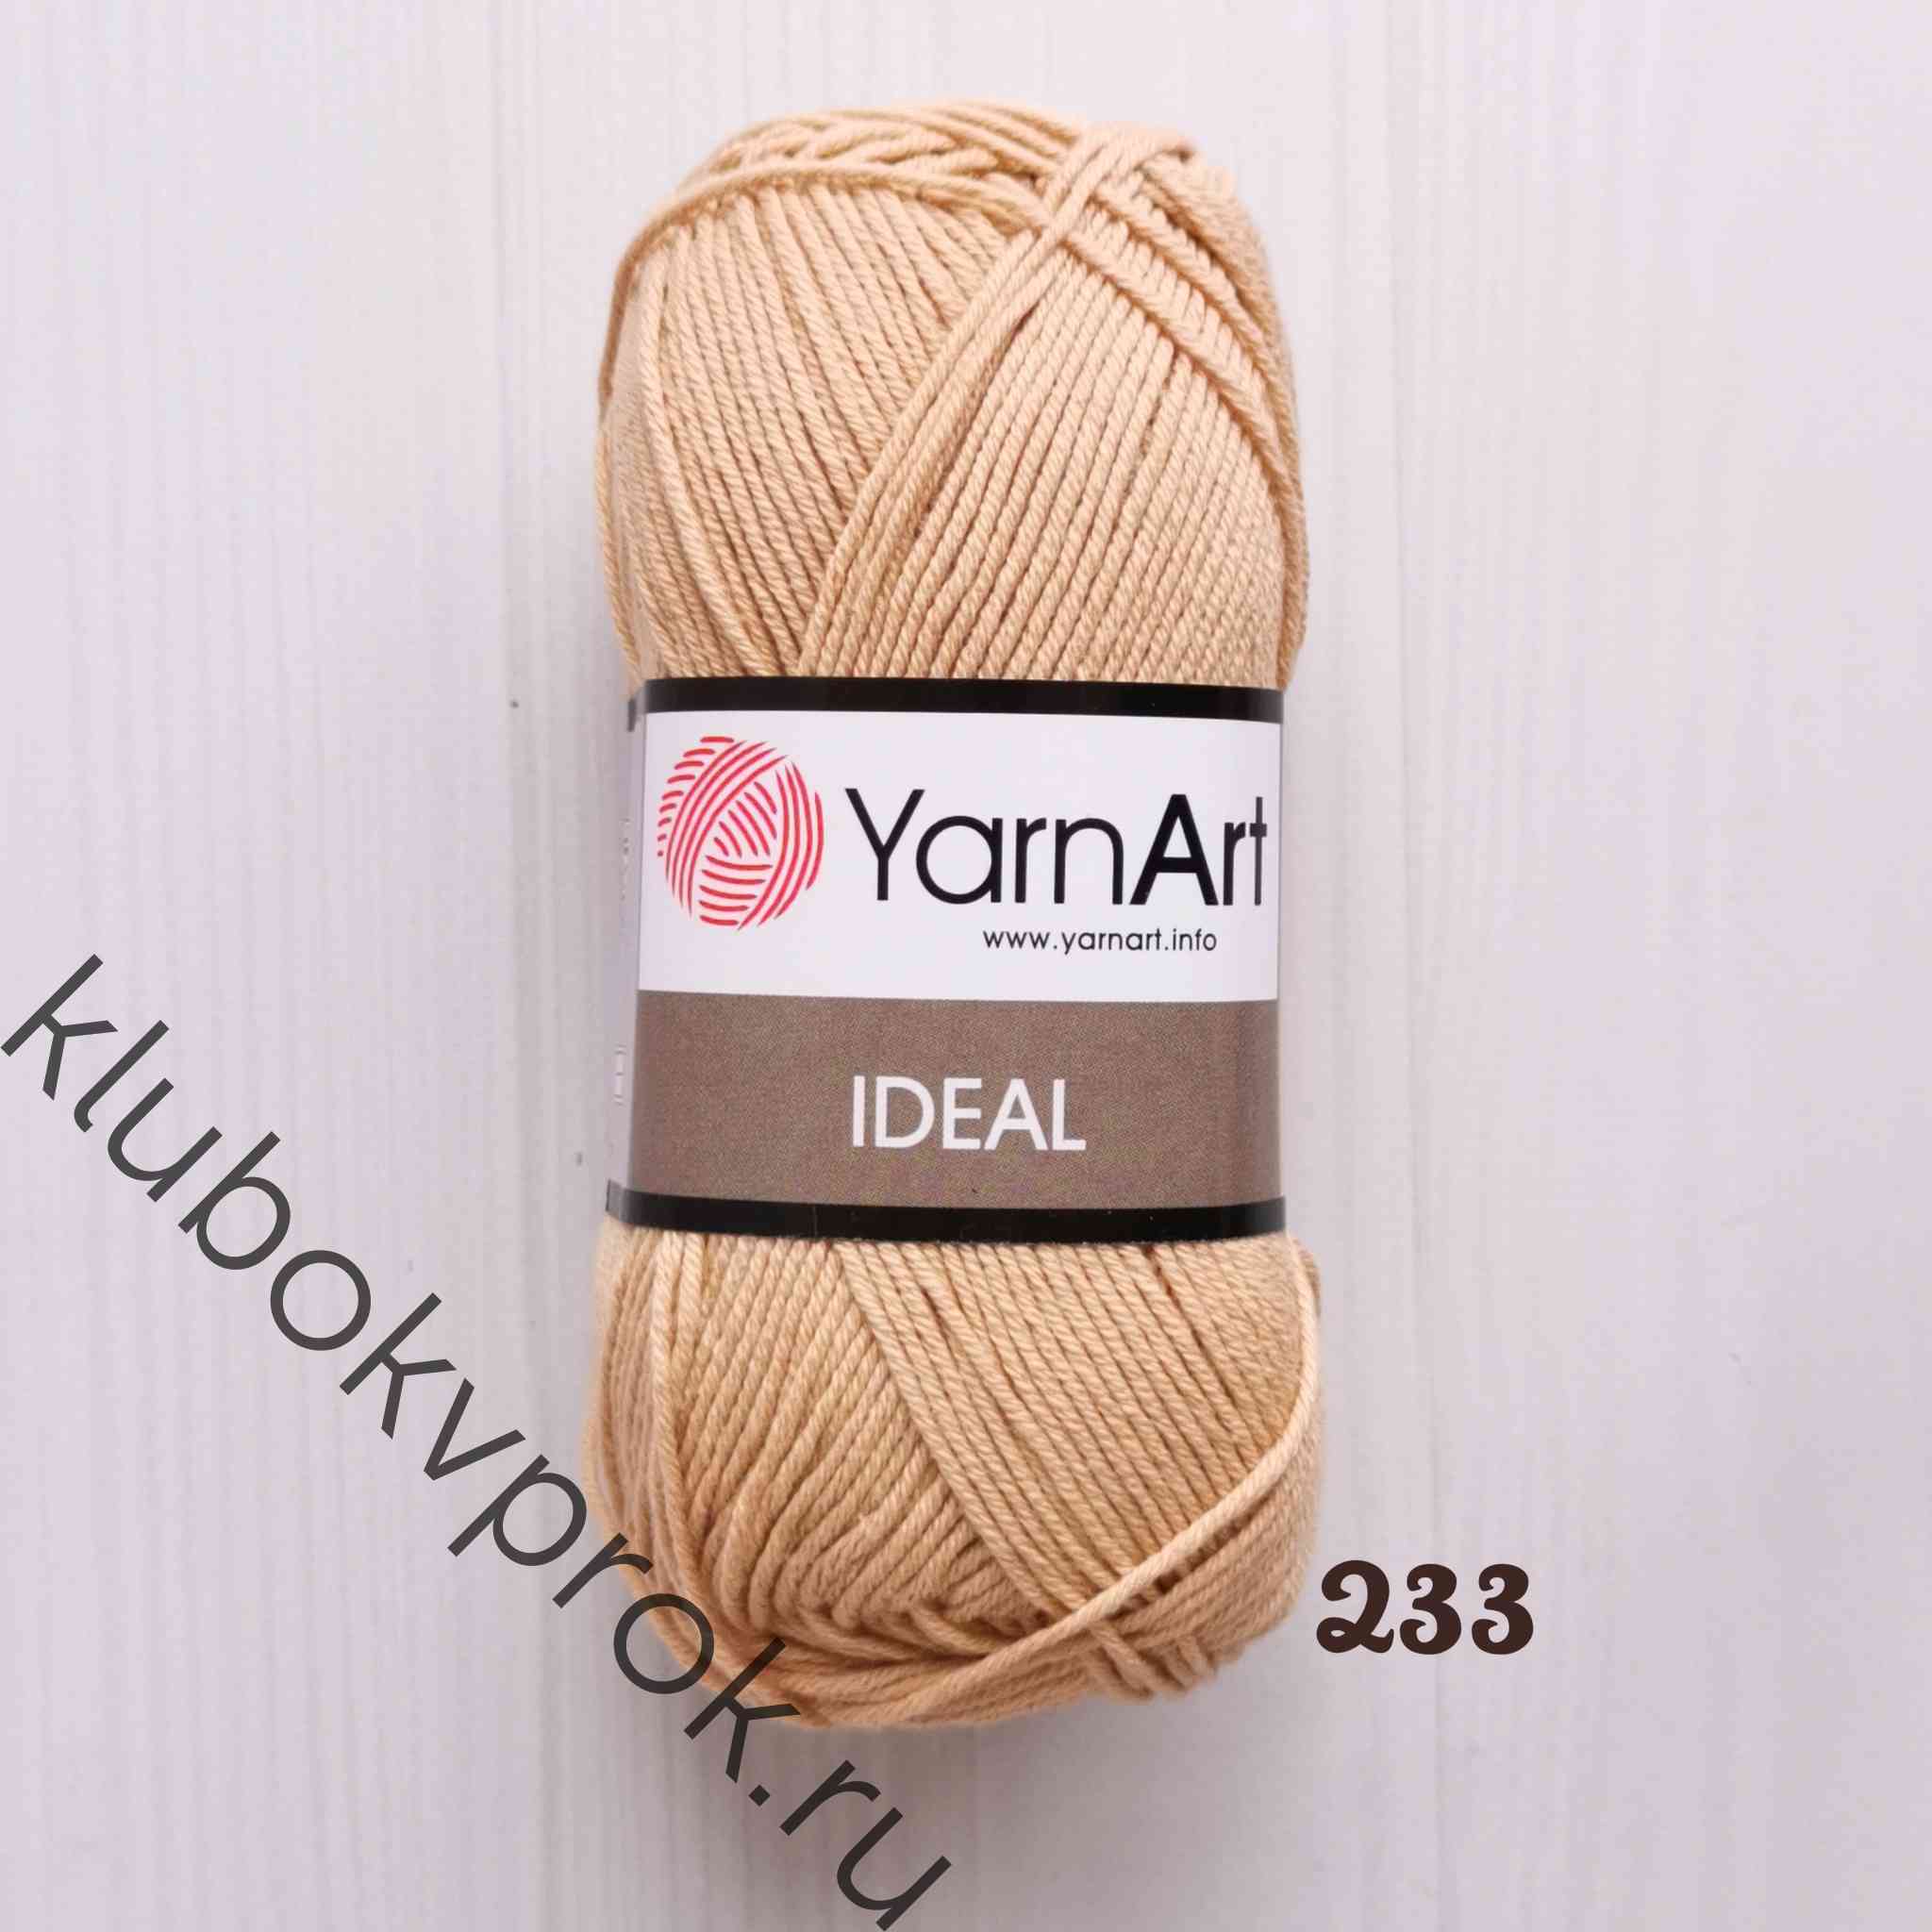 Yarnart Ideal - Knitting Yarn Beige - 233